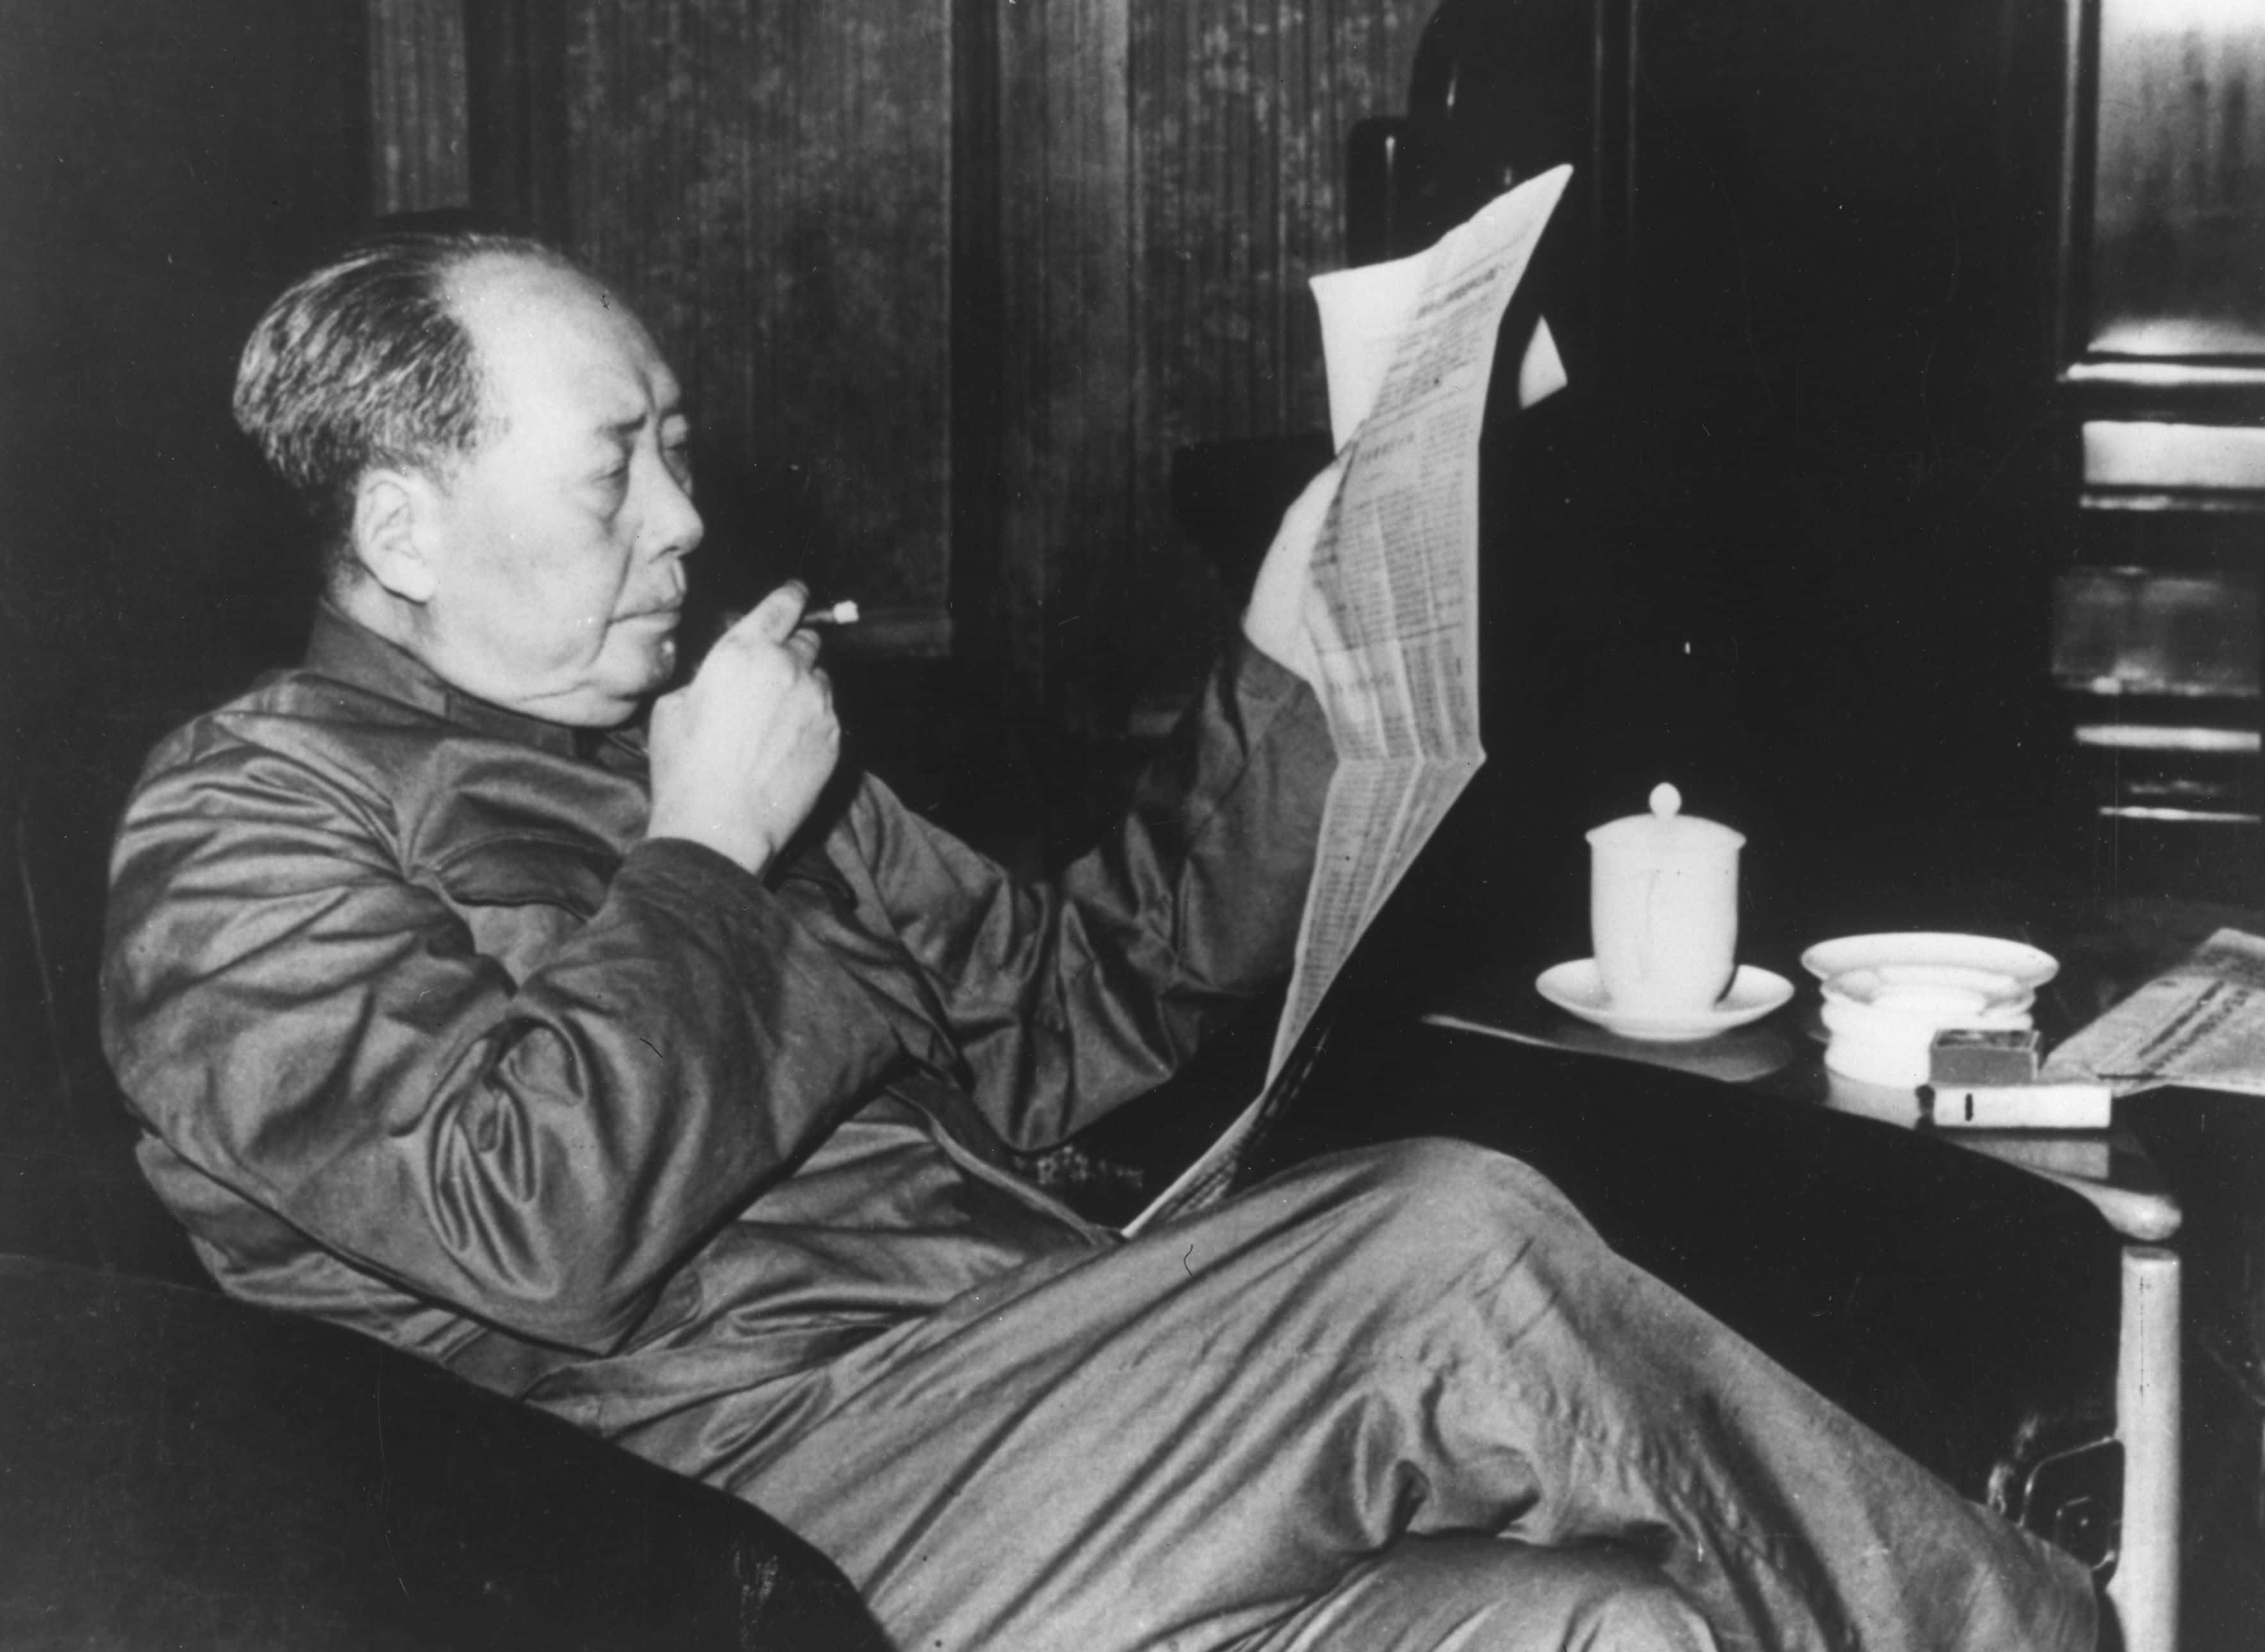 Chairman Mao facts 